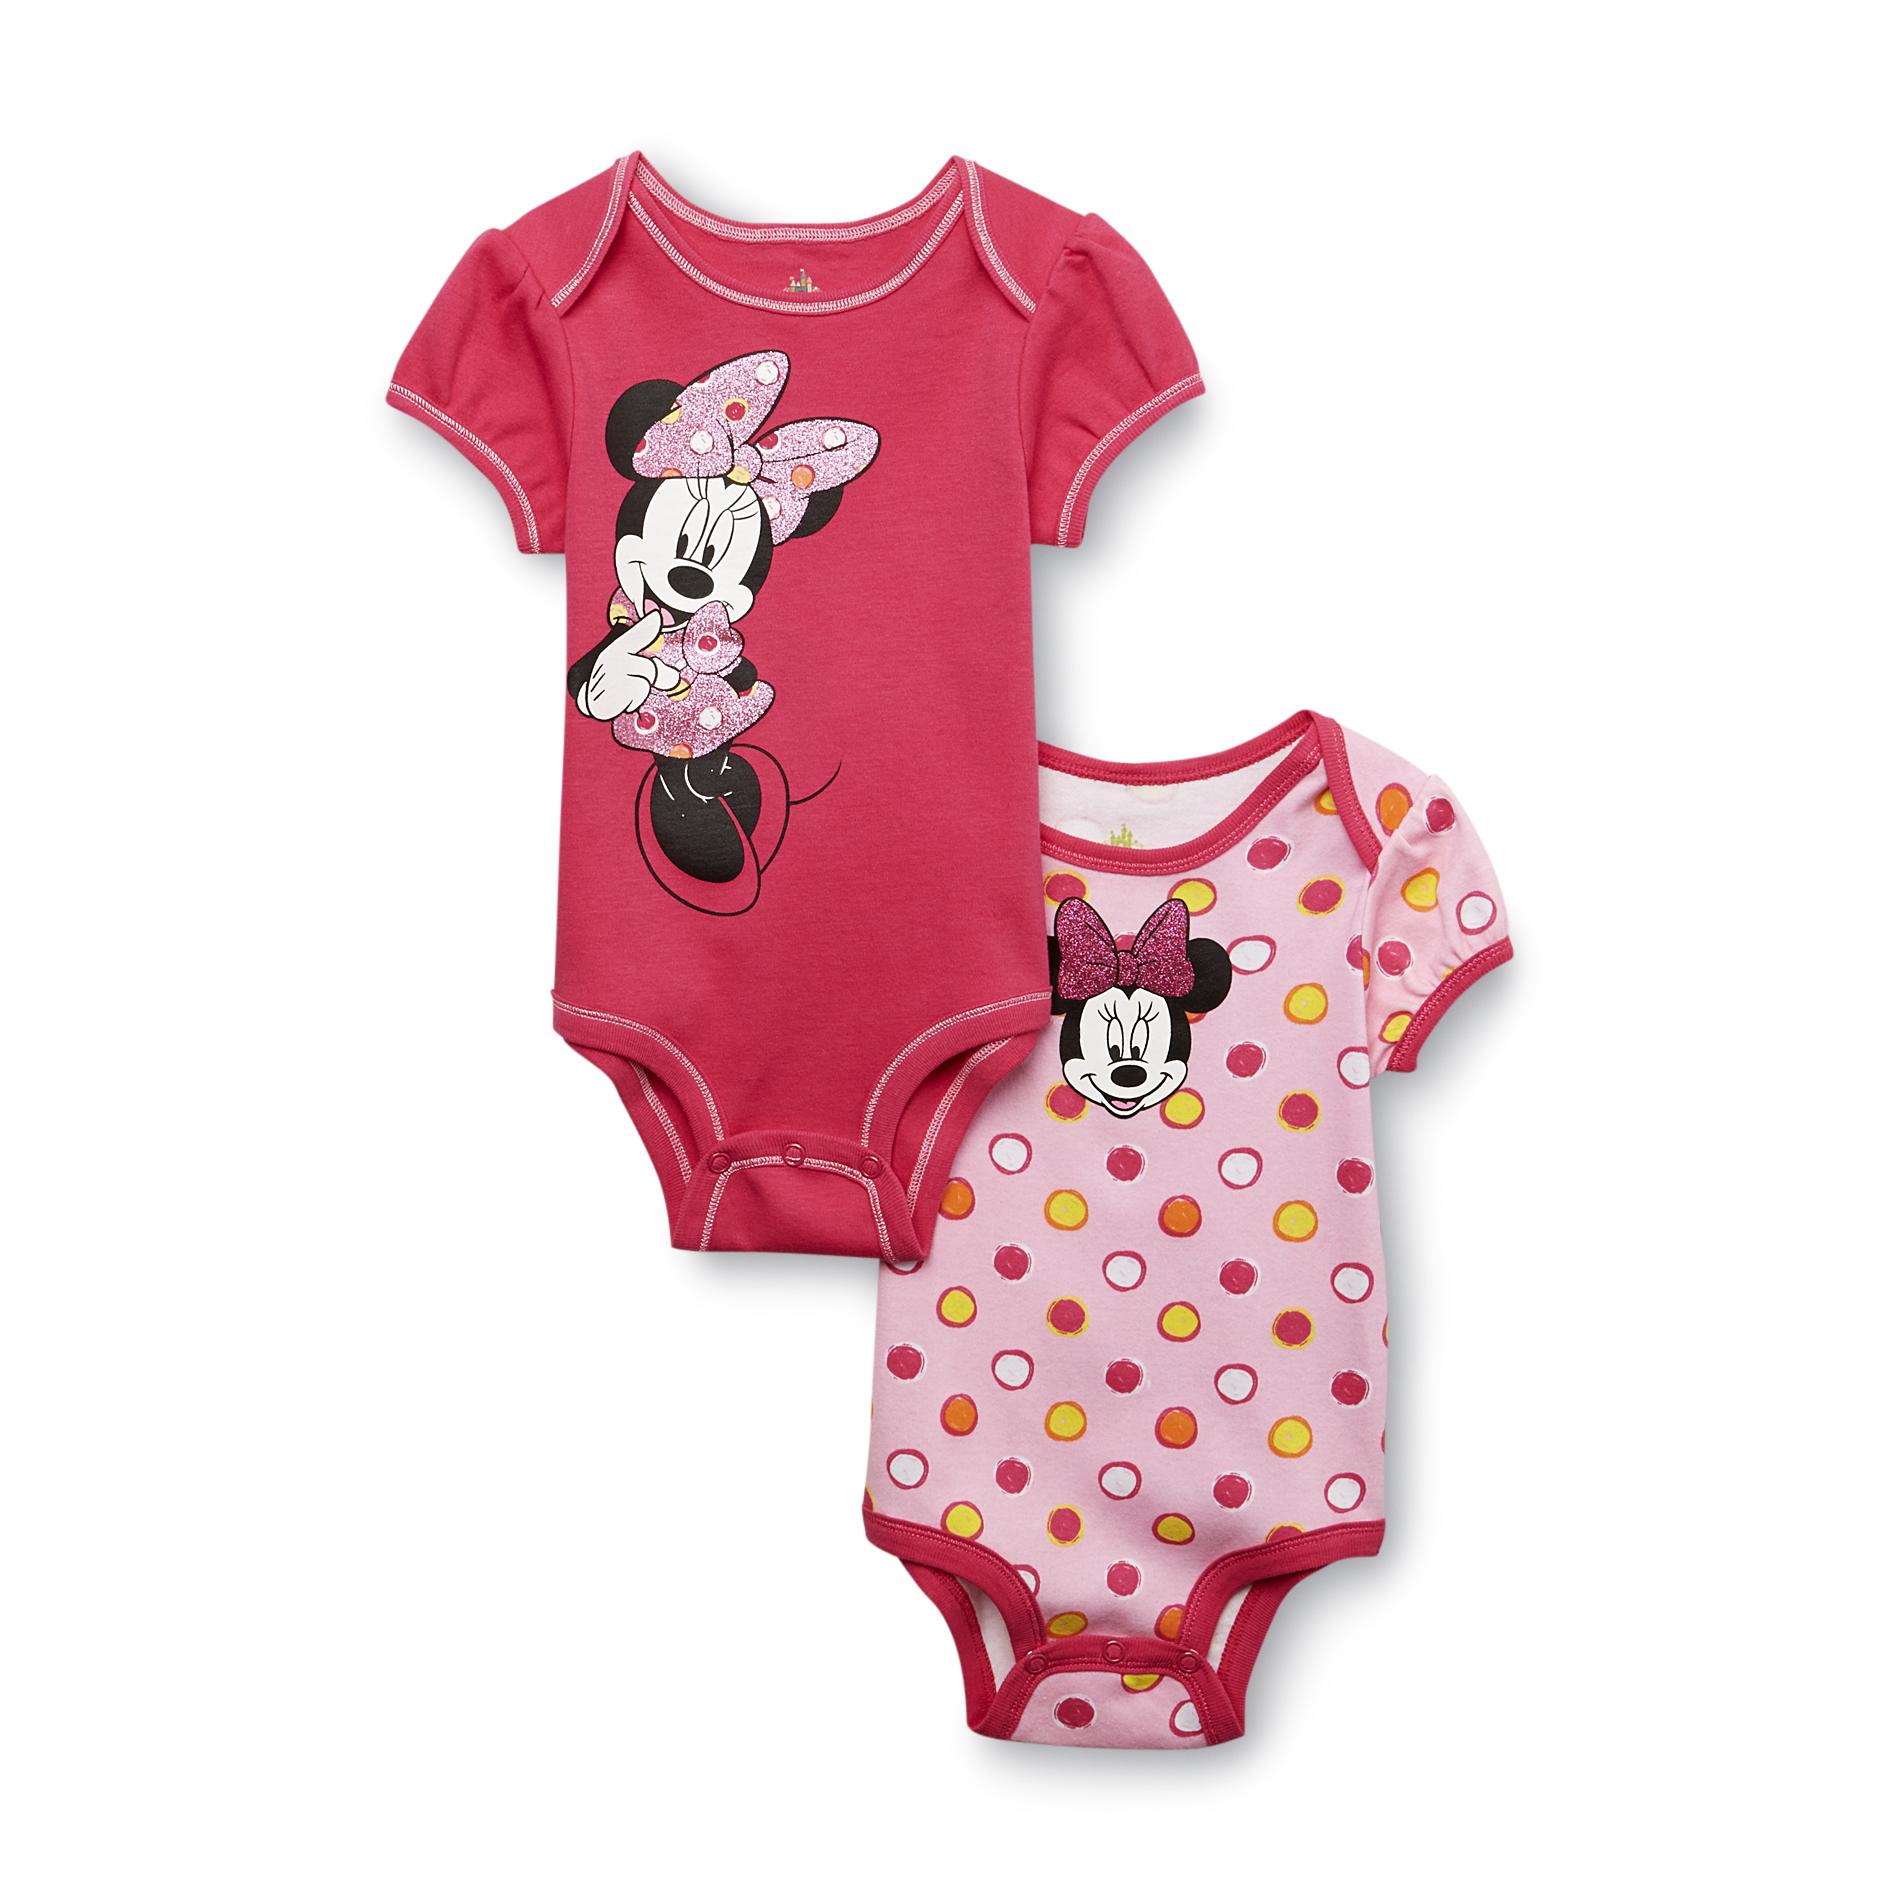 Disney Newborn Girl's 2-Pack Bodysuits - Minnie Mouse